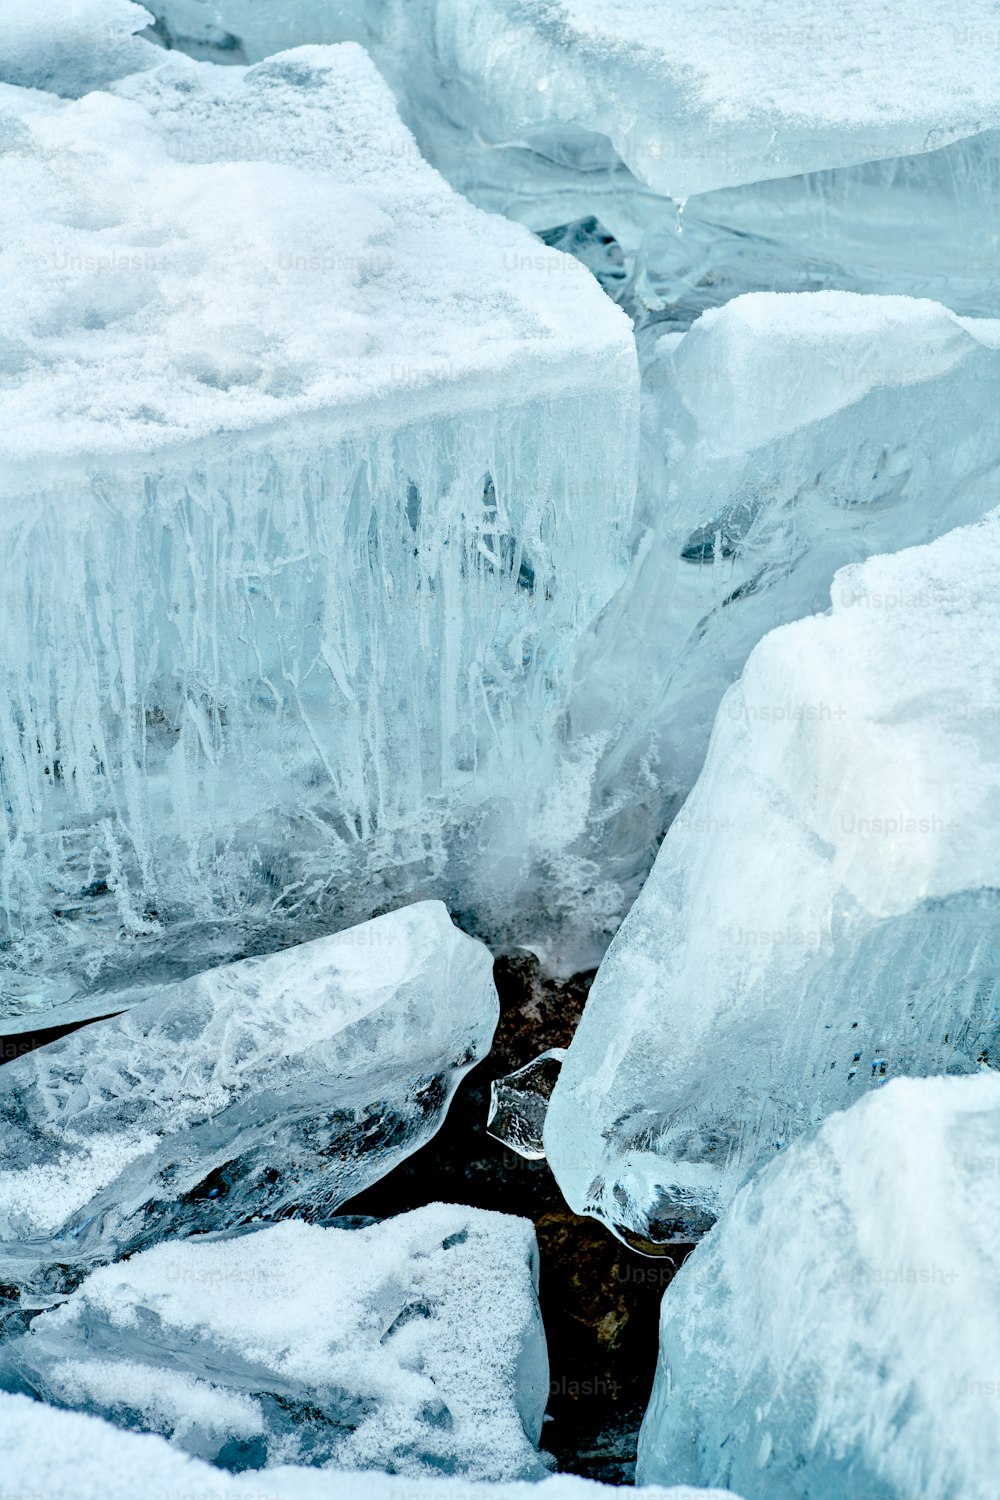 a polar bear sitting on ice blocks in the water